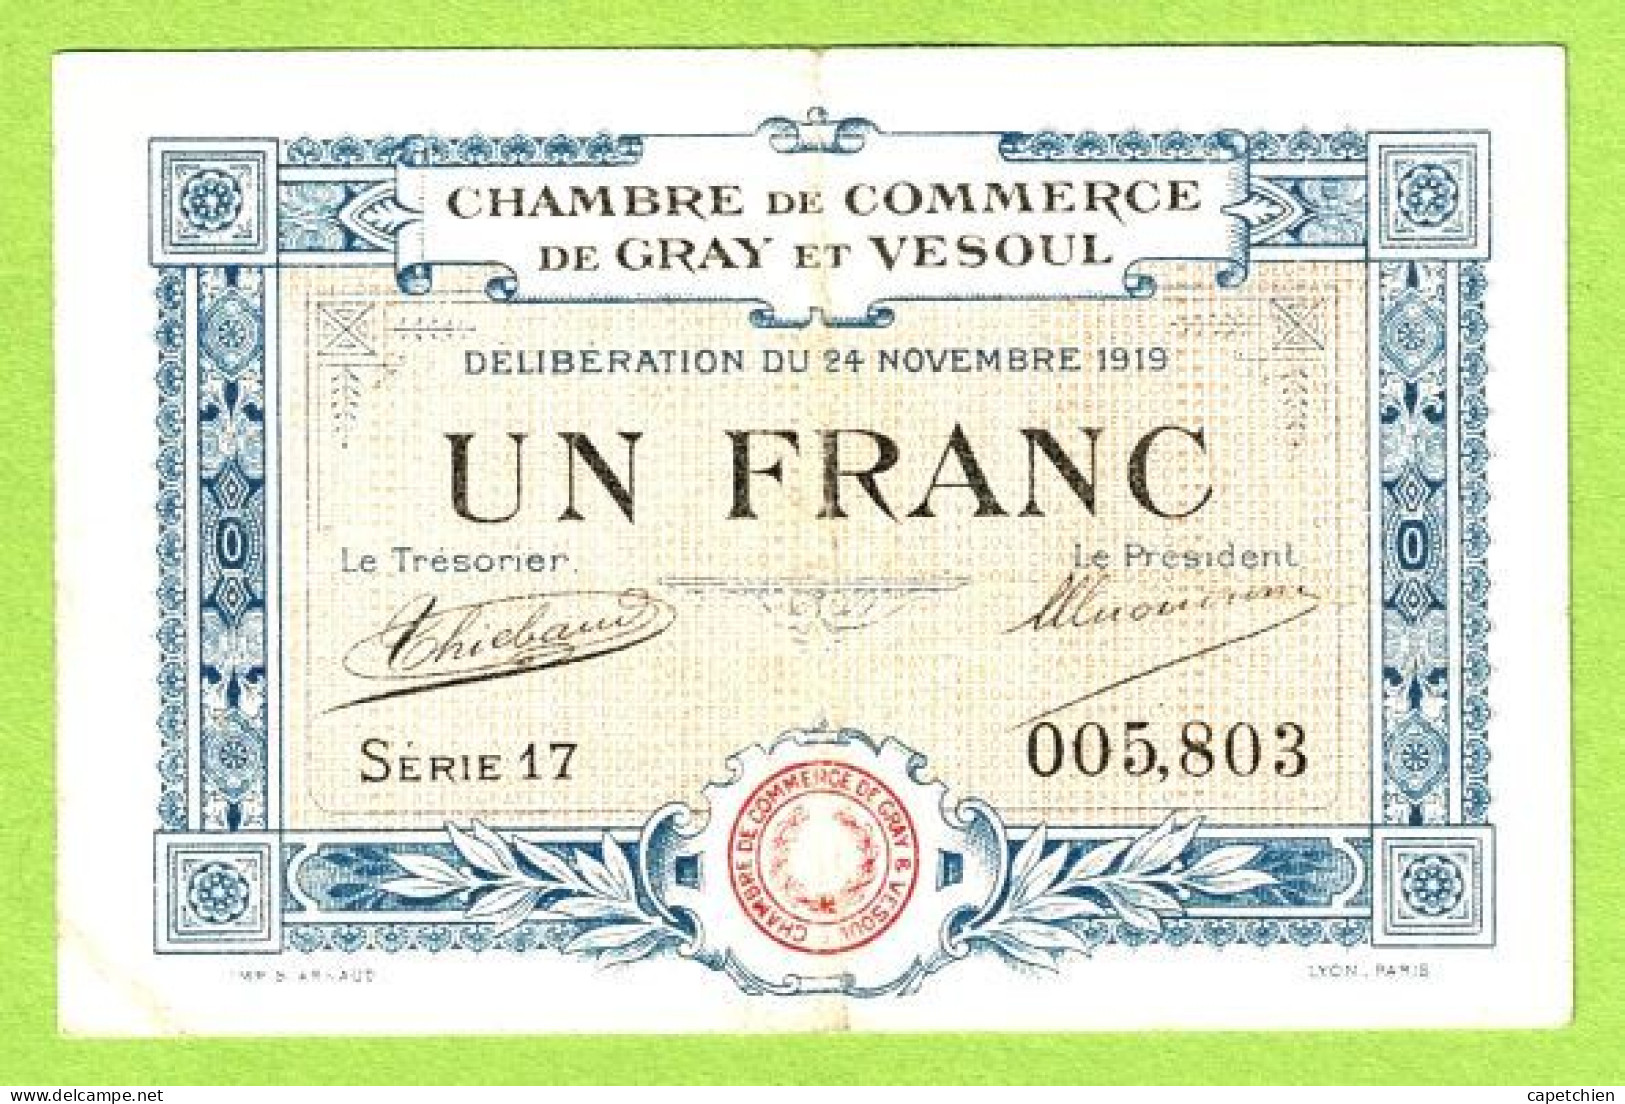 FRANCE / CHAMBRE De COMMERCE / GRAY -  VESOUL / 1 FRANC / 24 NOVEMBRE 1919 / SERIE 17 / N° 005803 - Chamber Of Commerce